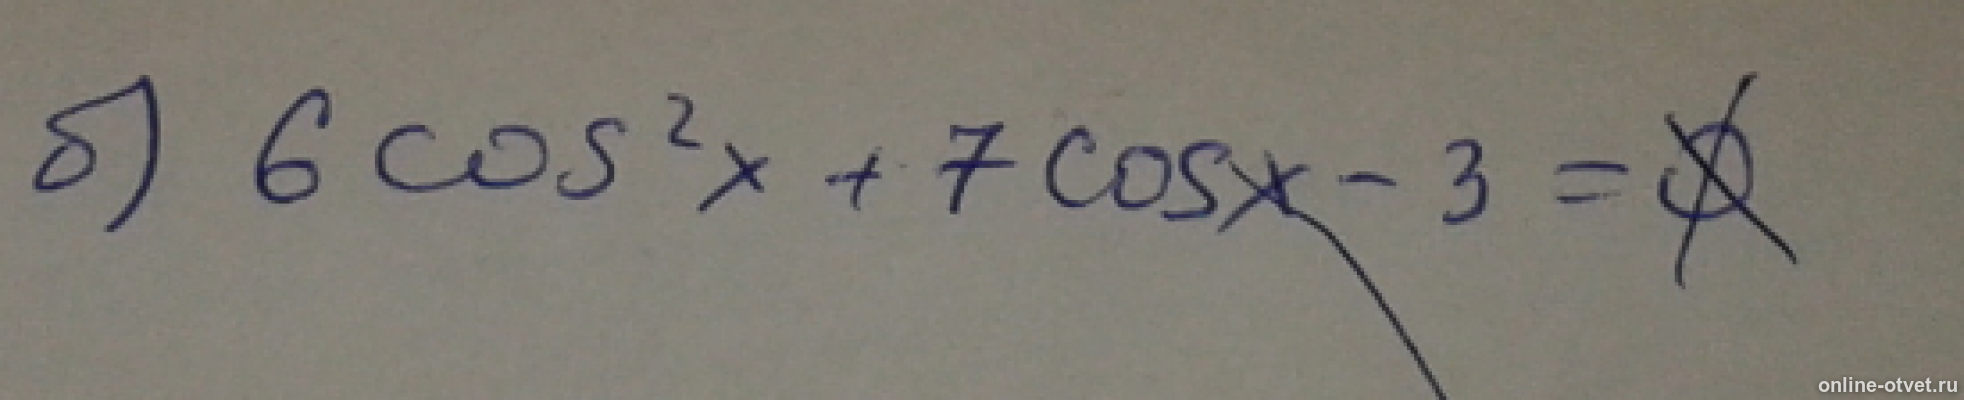 Vi cos. (Cos𝑥)2+7cos𝑥+6=0. 6cos2x+7cosx-3=0. 6cos2x-cosx-2 корень -sinx. -6cos x = cos x 7 3 2.